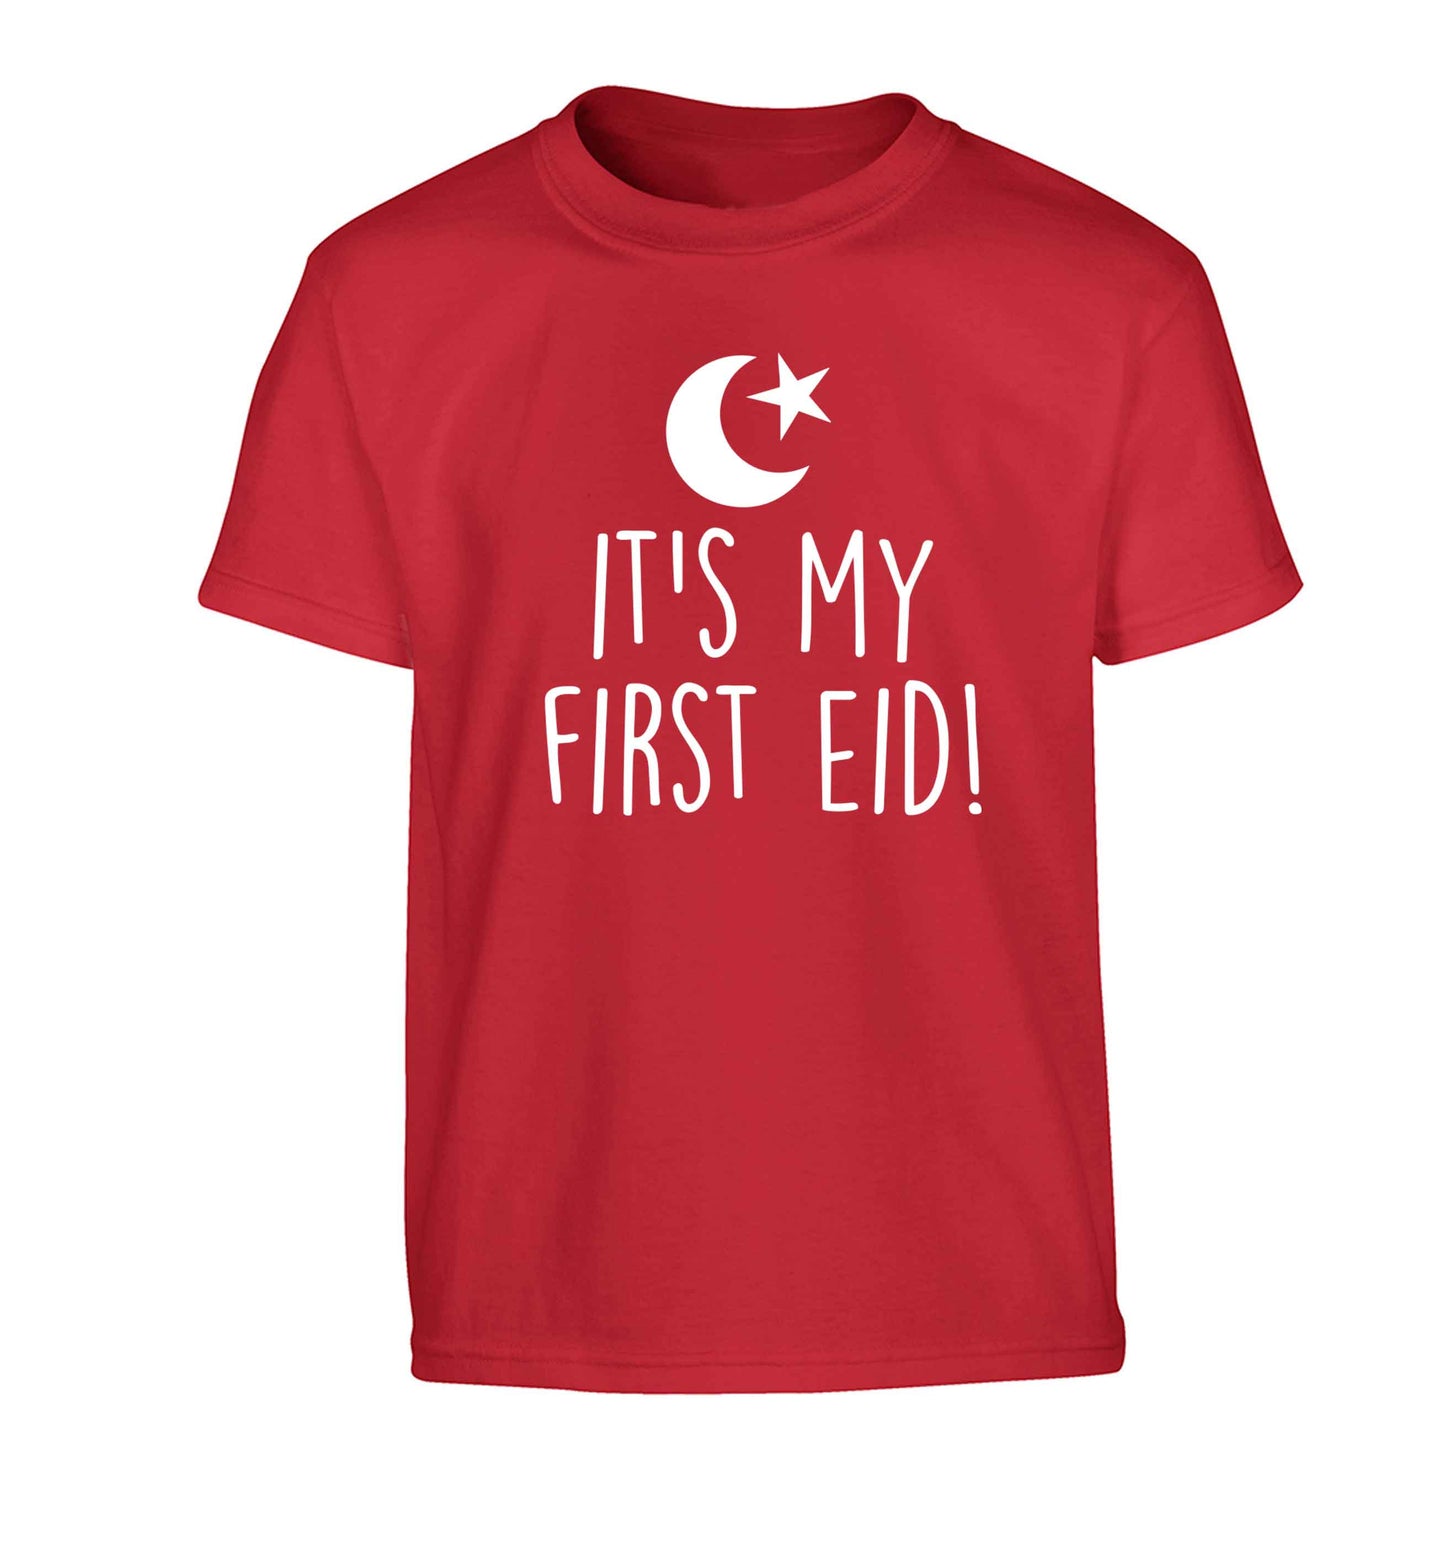 It's my first Eid Children's red Tshirt 12-13 Years